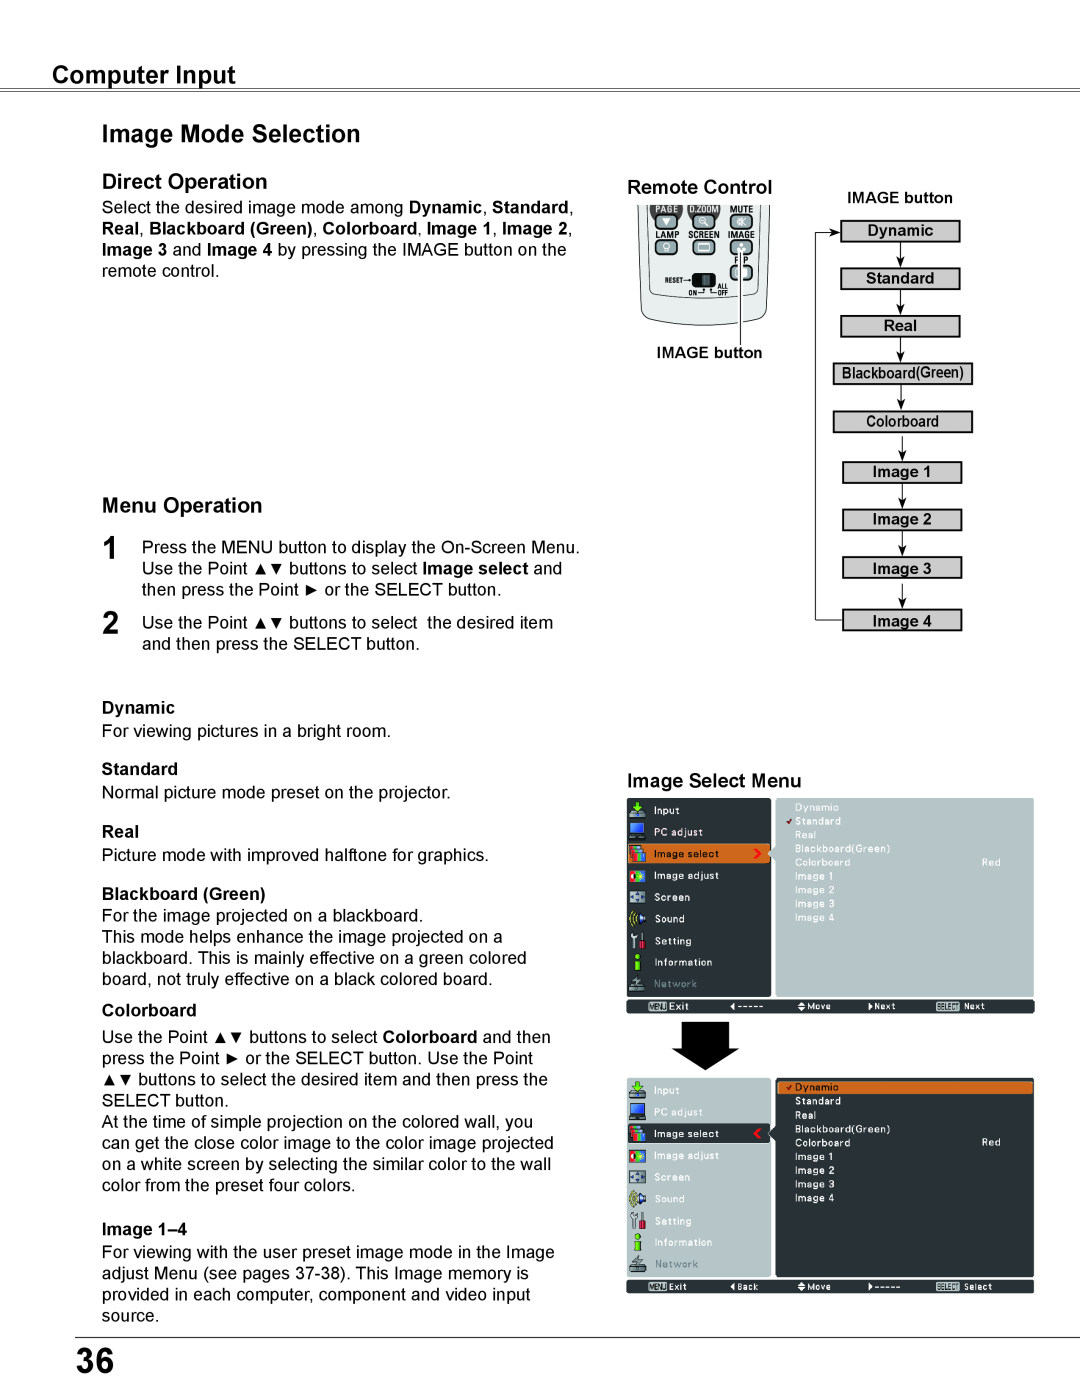 Sanyo WXU700A Computer Input Image Mode Selection, Image Select Menu, Dynamic, Standard, Real, Blackboard Green, Image 1–4 